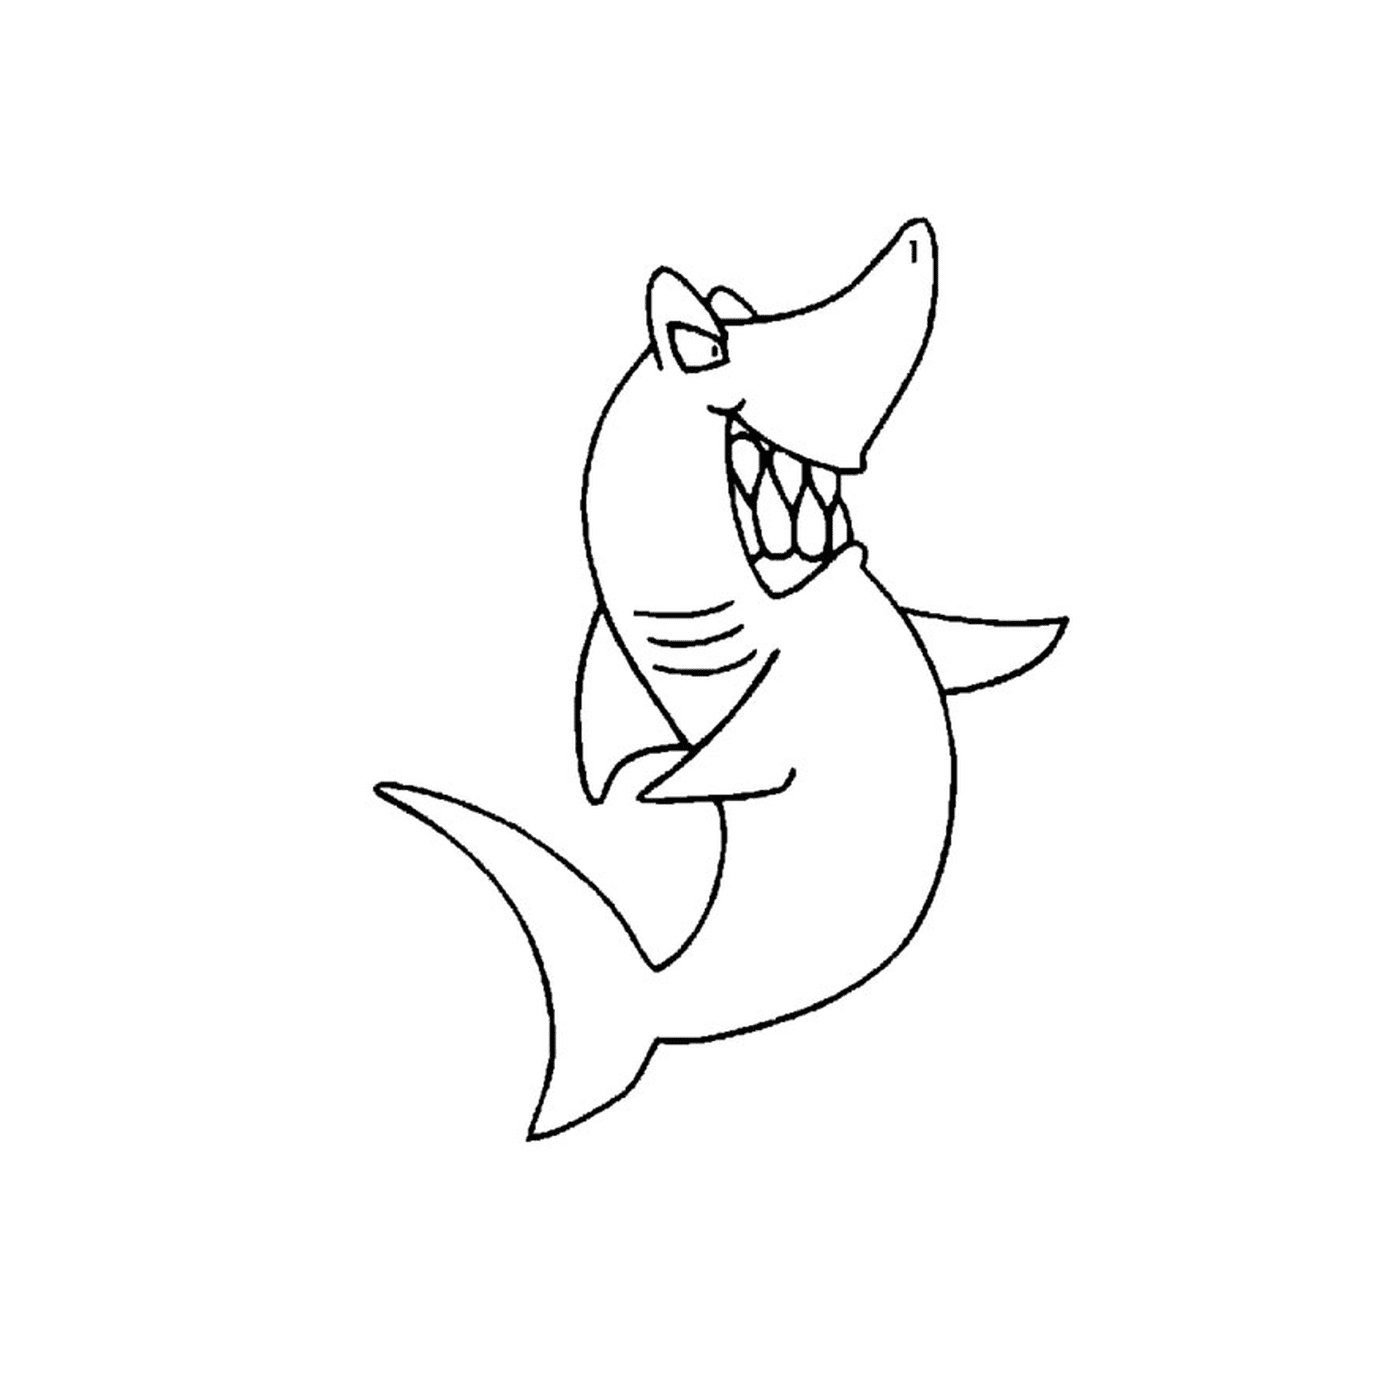  Перегрин-акулы улыбаются 